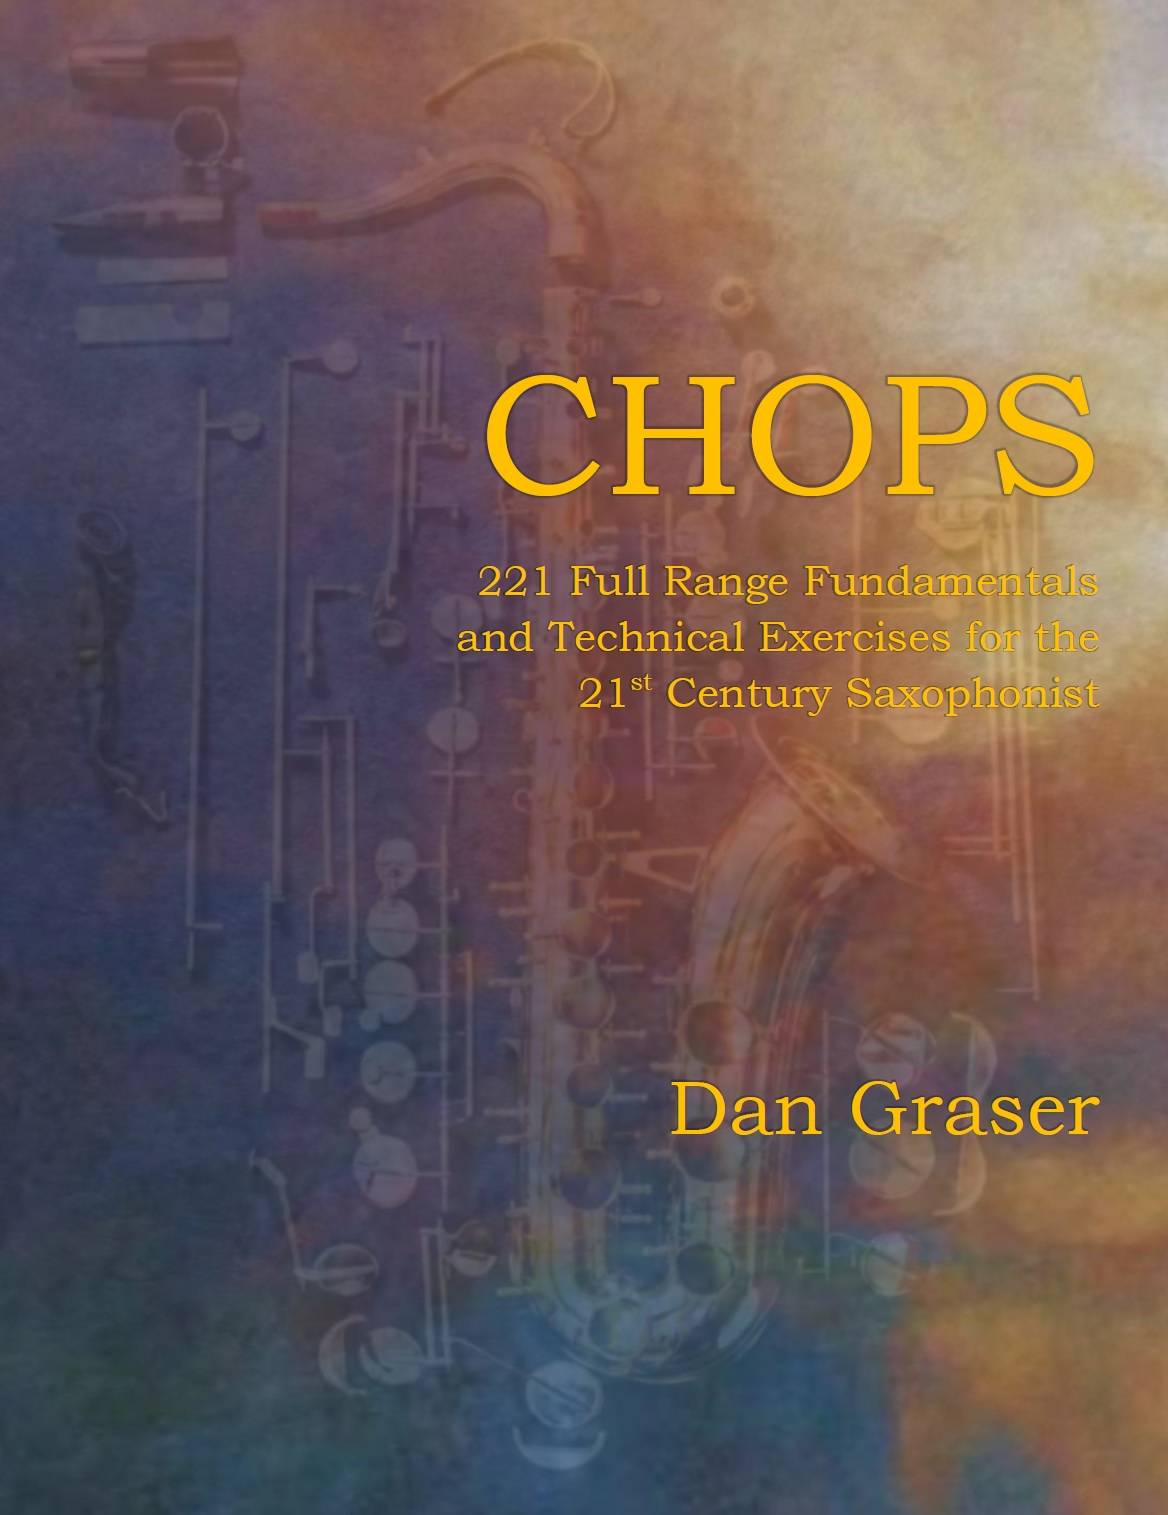 Chops by Dan Graser